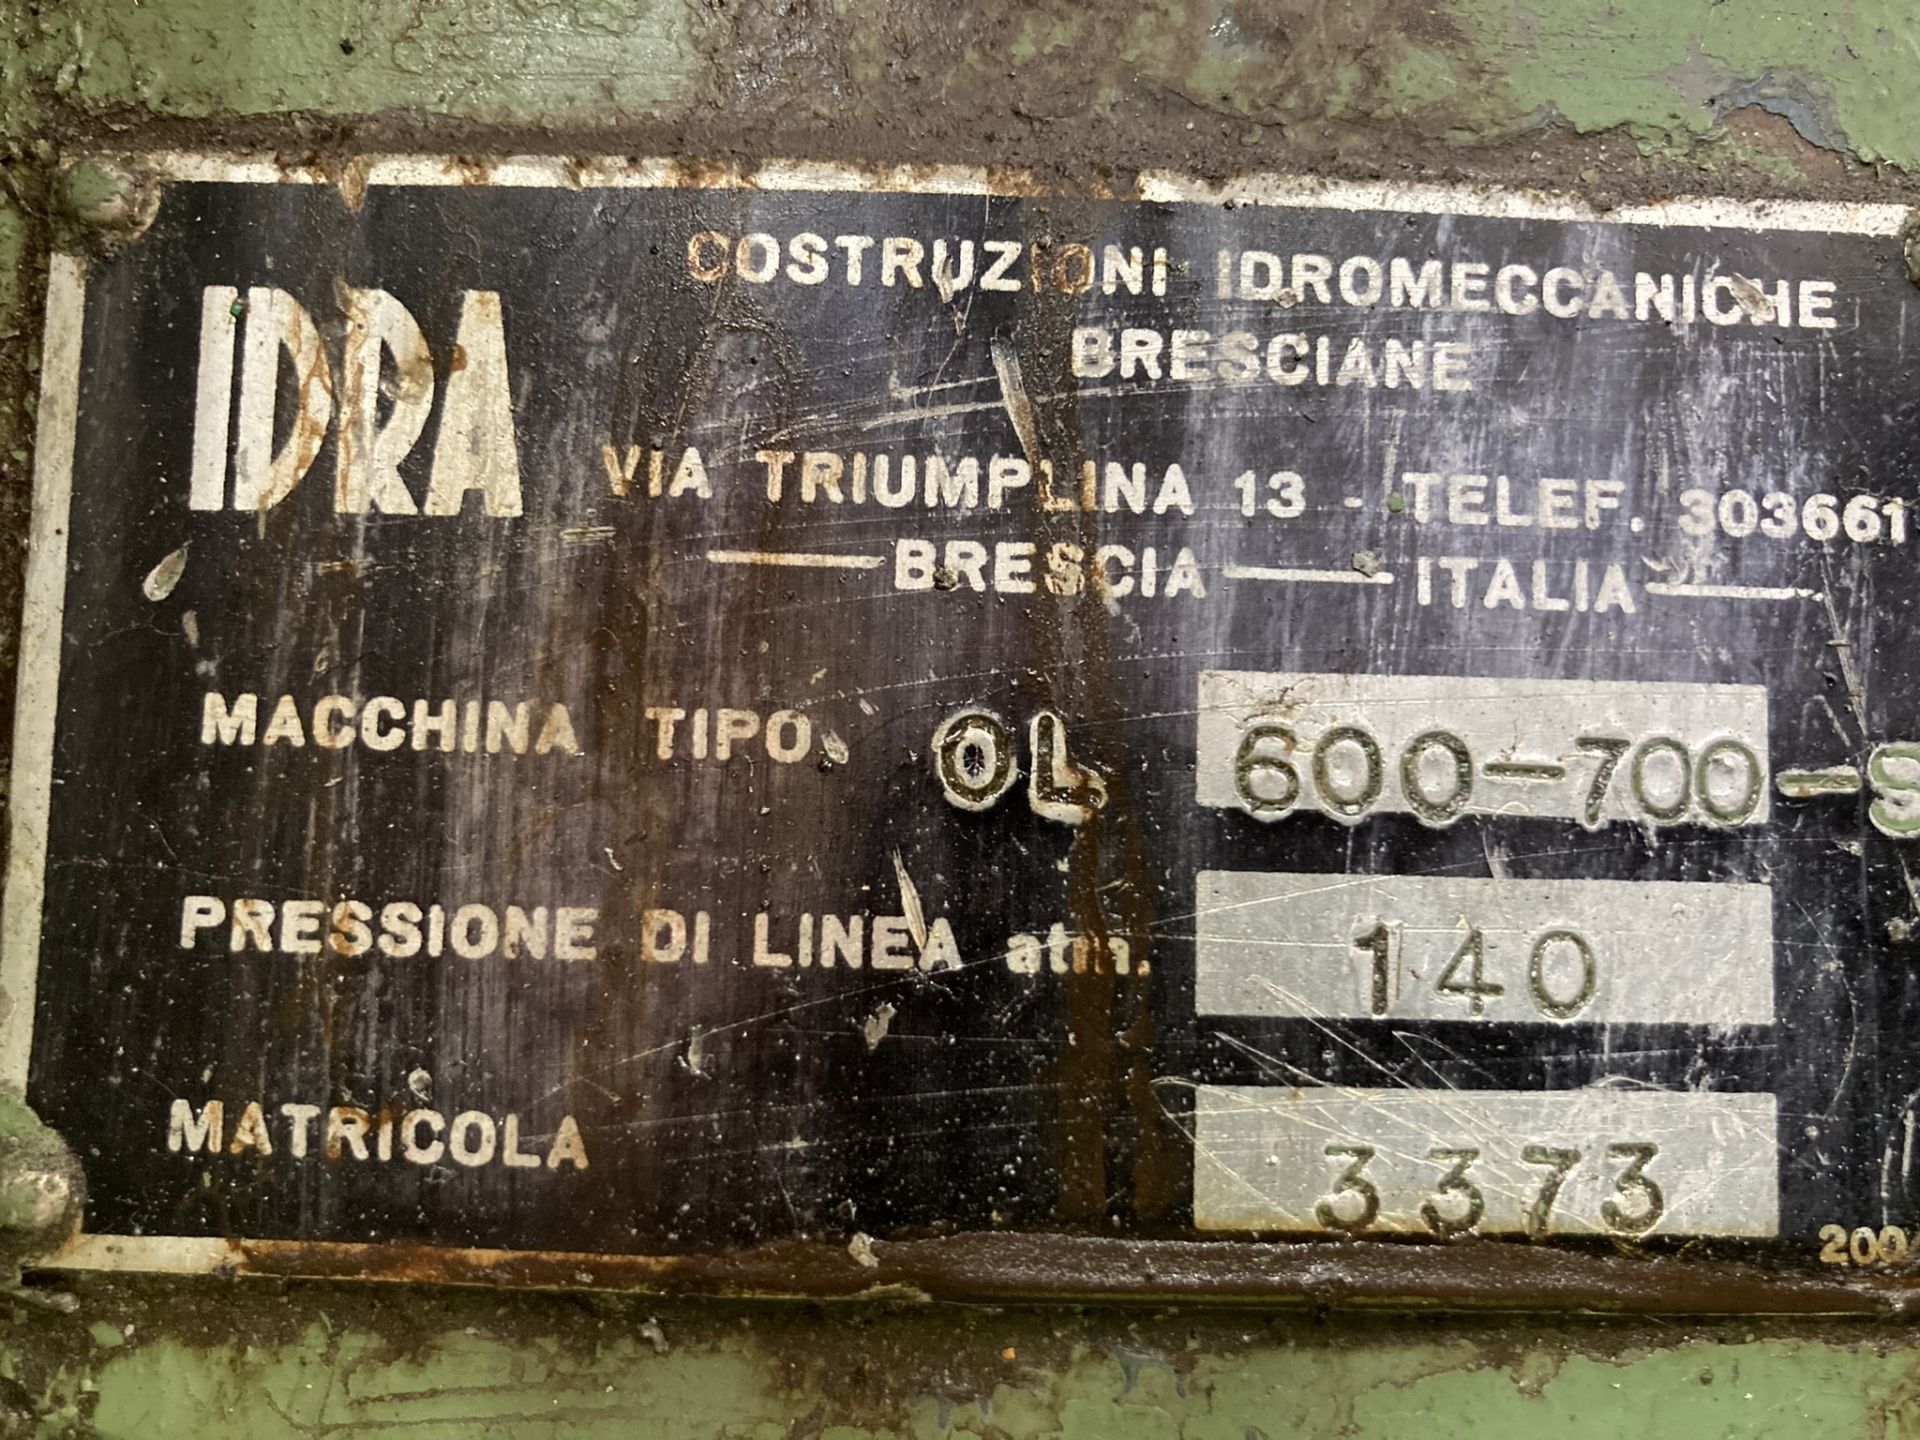 1 Idra, 600-700, Die-casting machine with Striko G